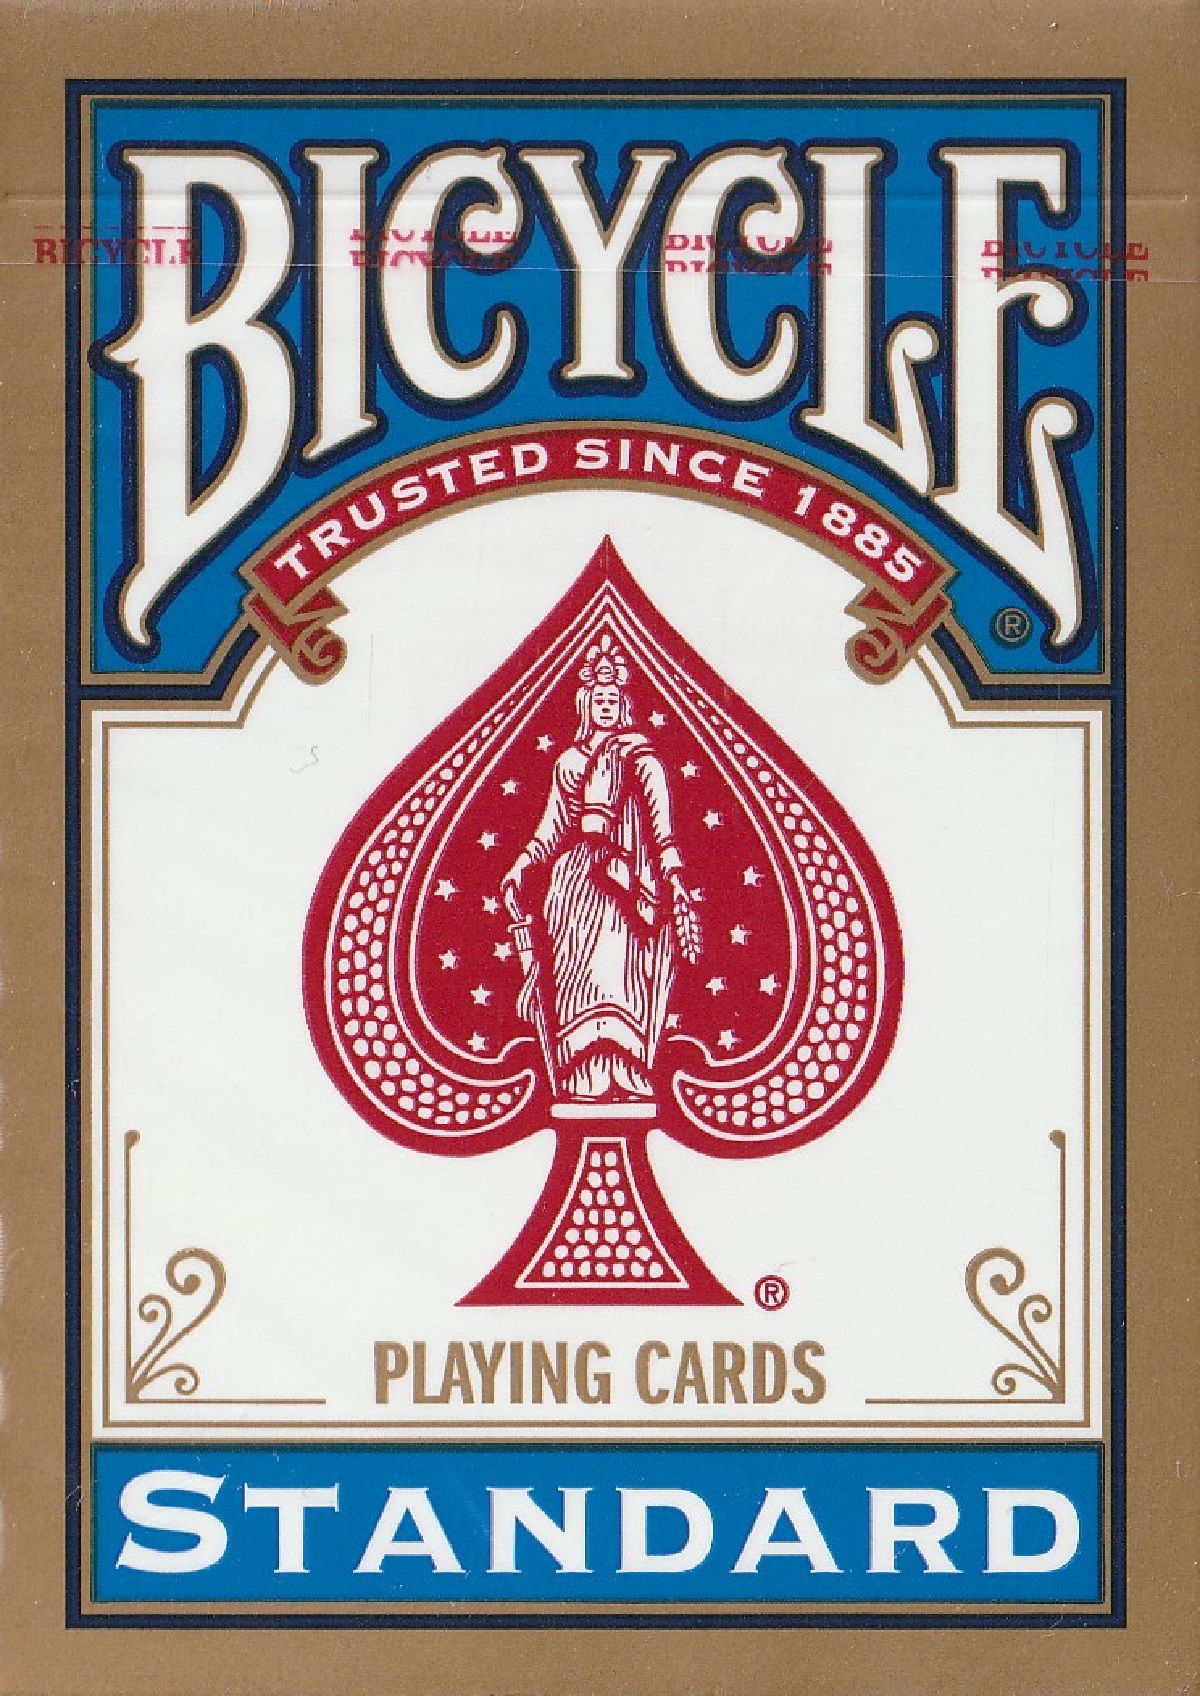 Carti de joc: Bicycle 808 Gold Standard Blue